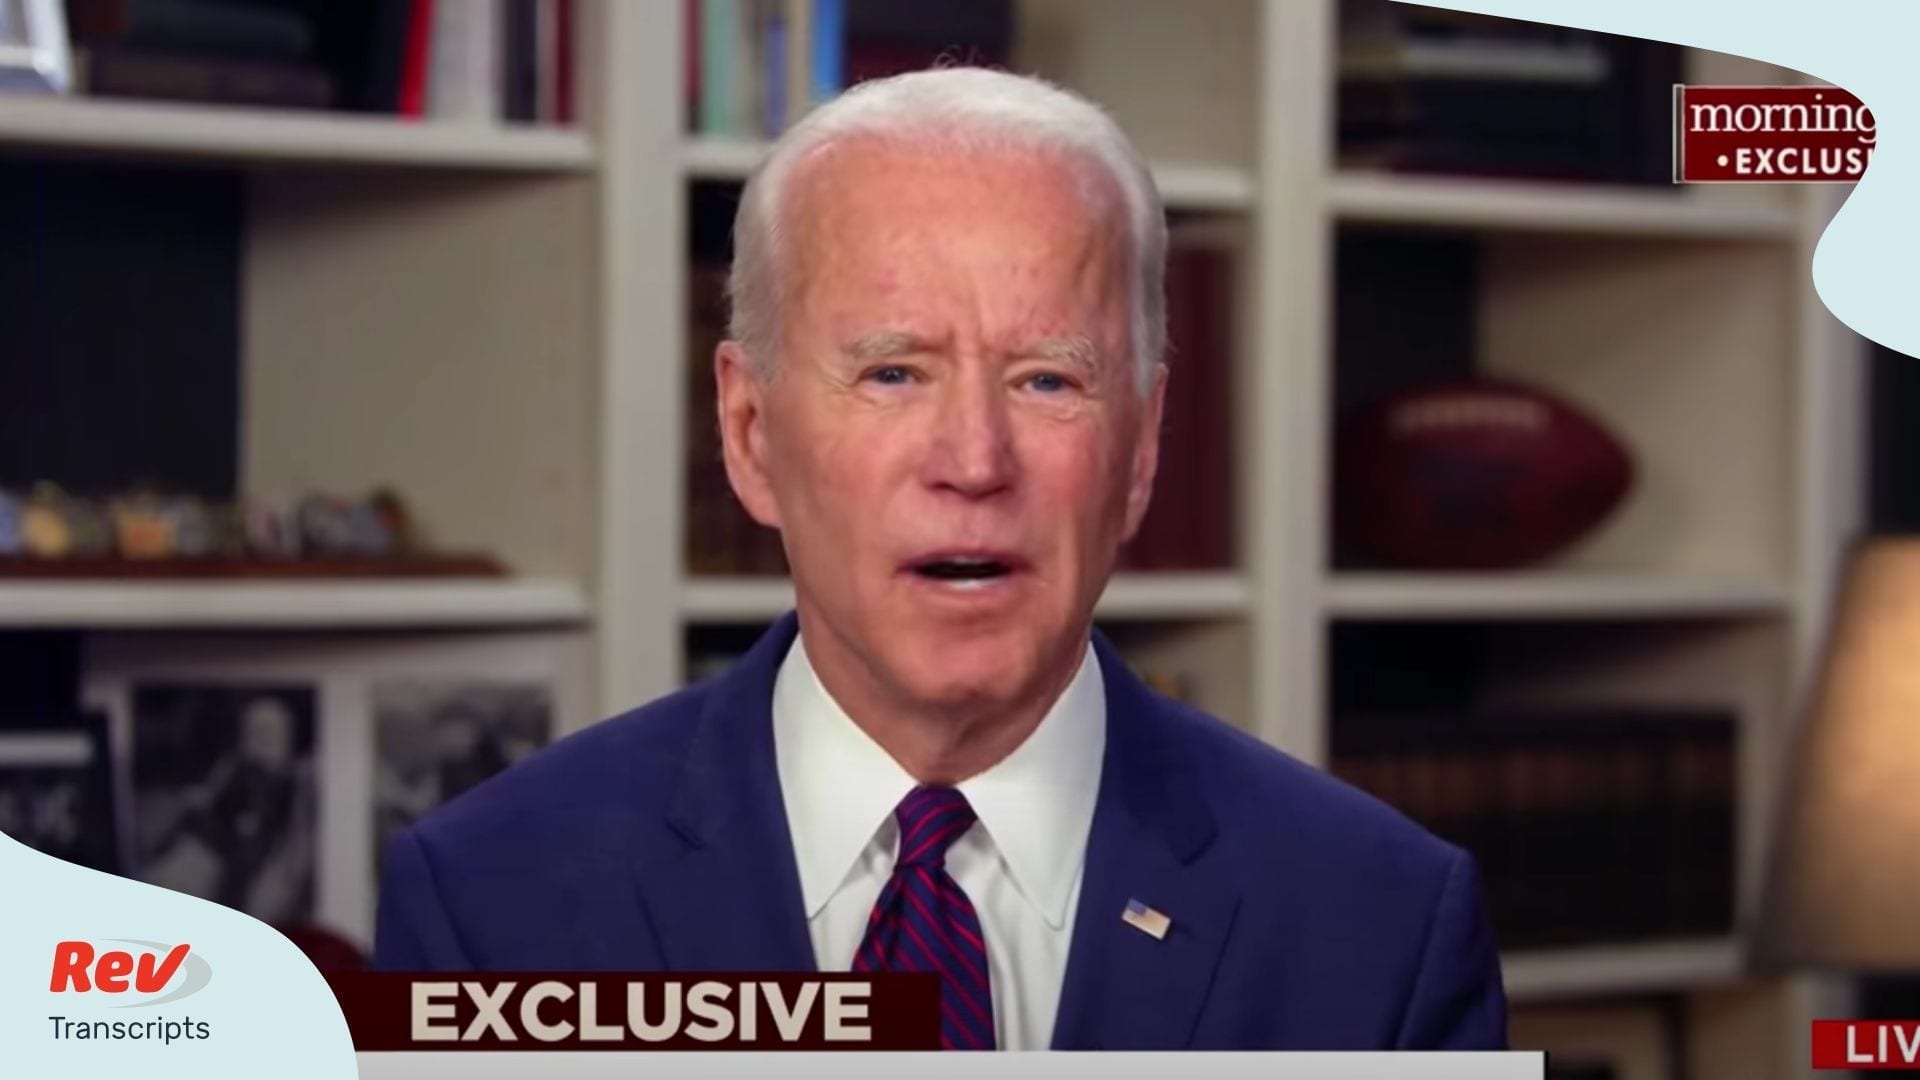 Joe Biden Interview Response to Sexual Allegations